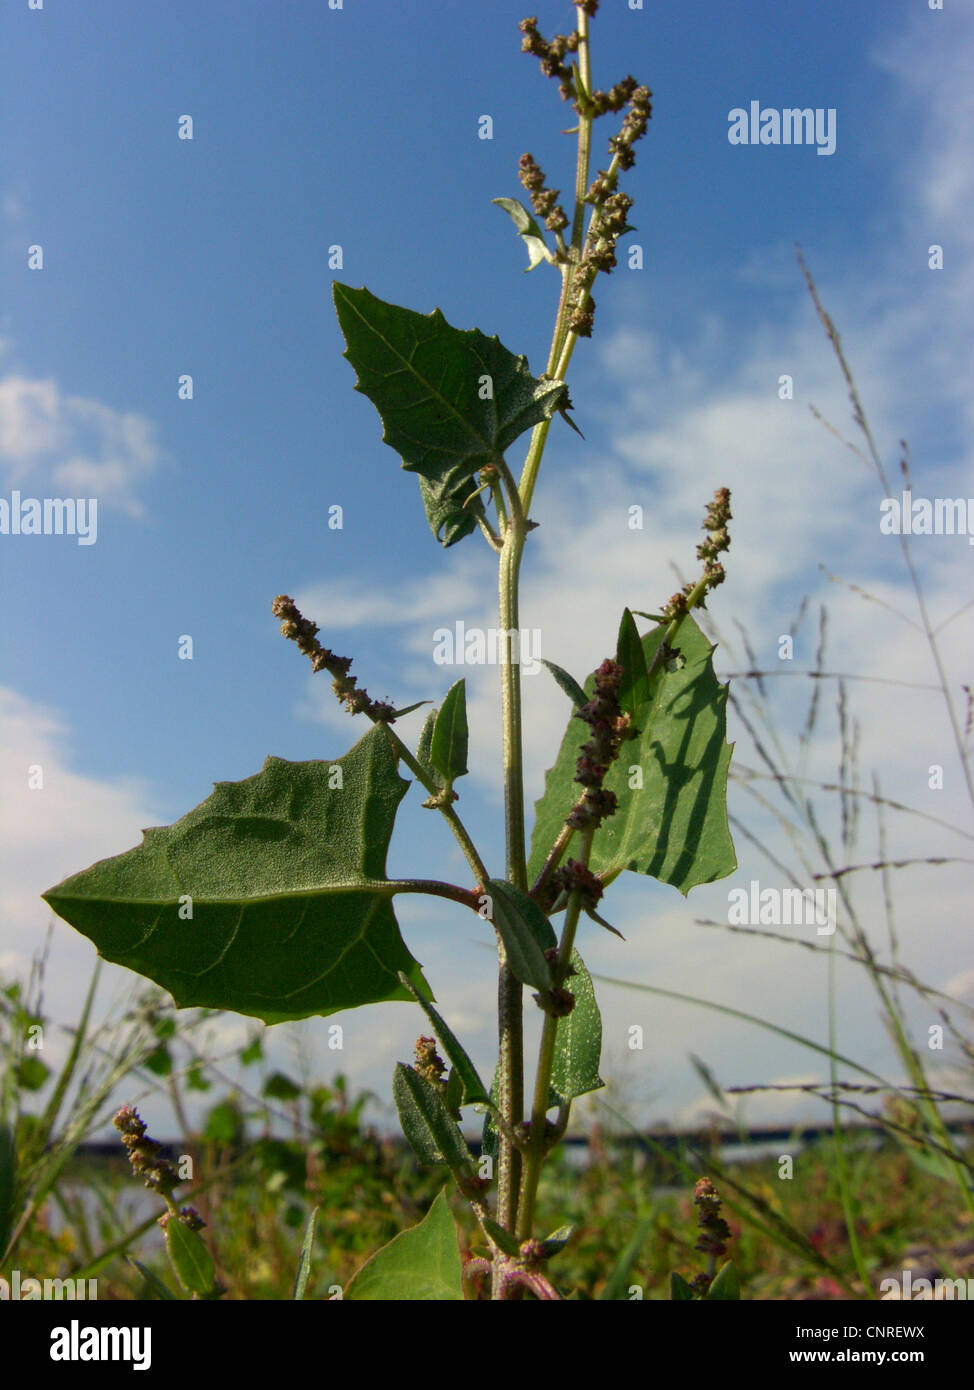 hastate orache, spear-leaved orache, creeping saltbush (Atriplex prostrata), leaves and infructescences, Germany, Saxony-Anhalt Stock Photo